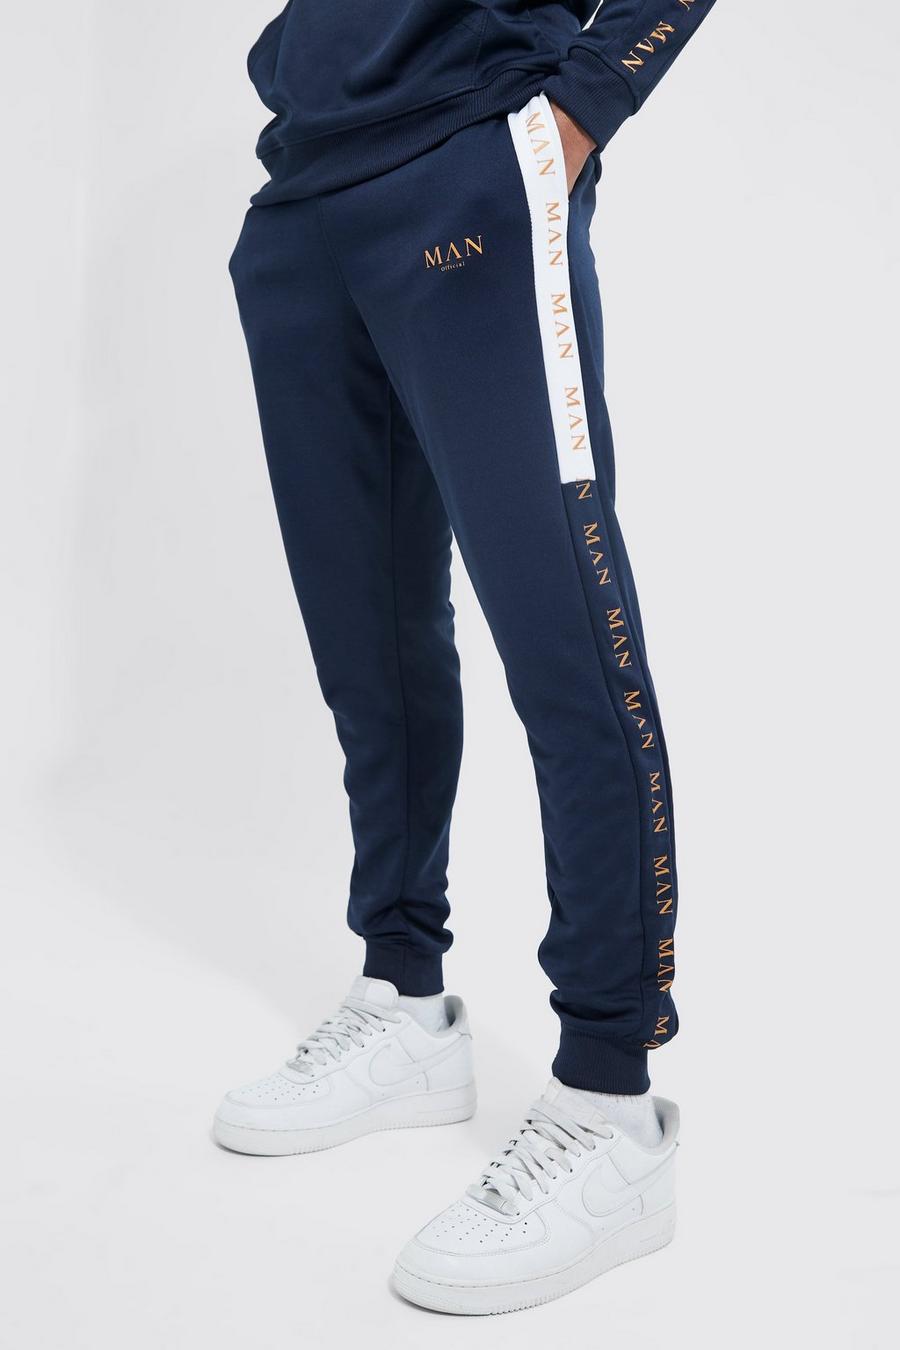 Pantalón deportivo pitillo de tejido por urdimbre con panel lateral y letras MAN doradas, Navy